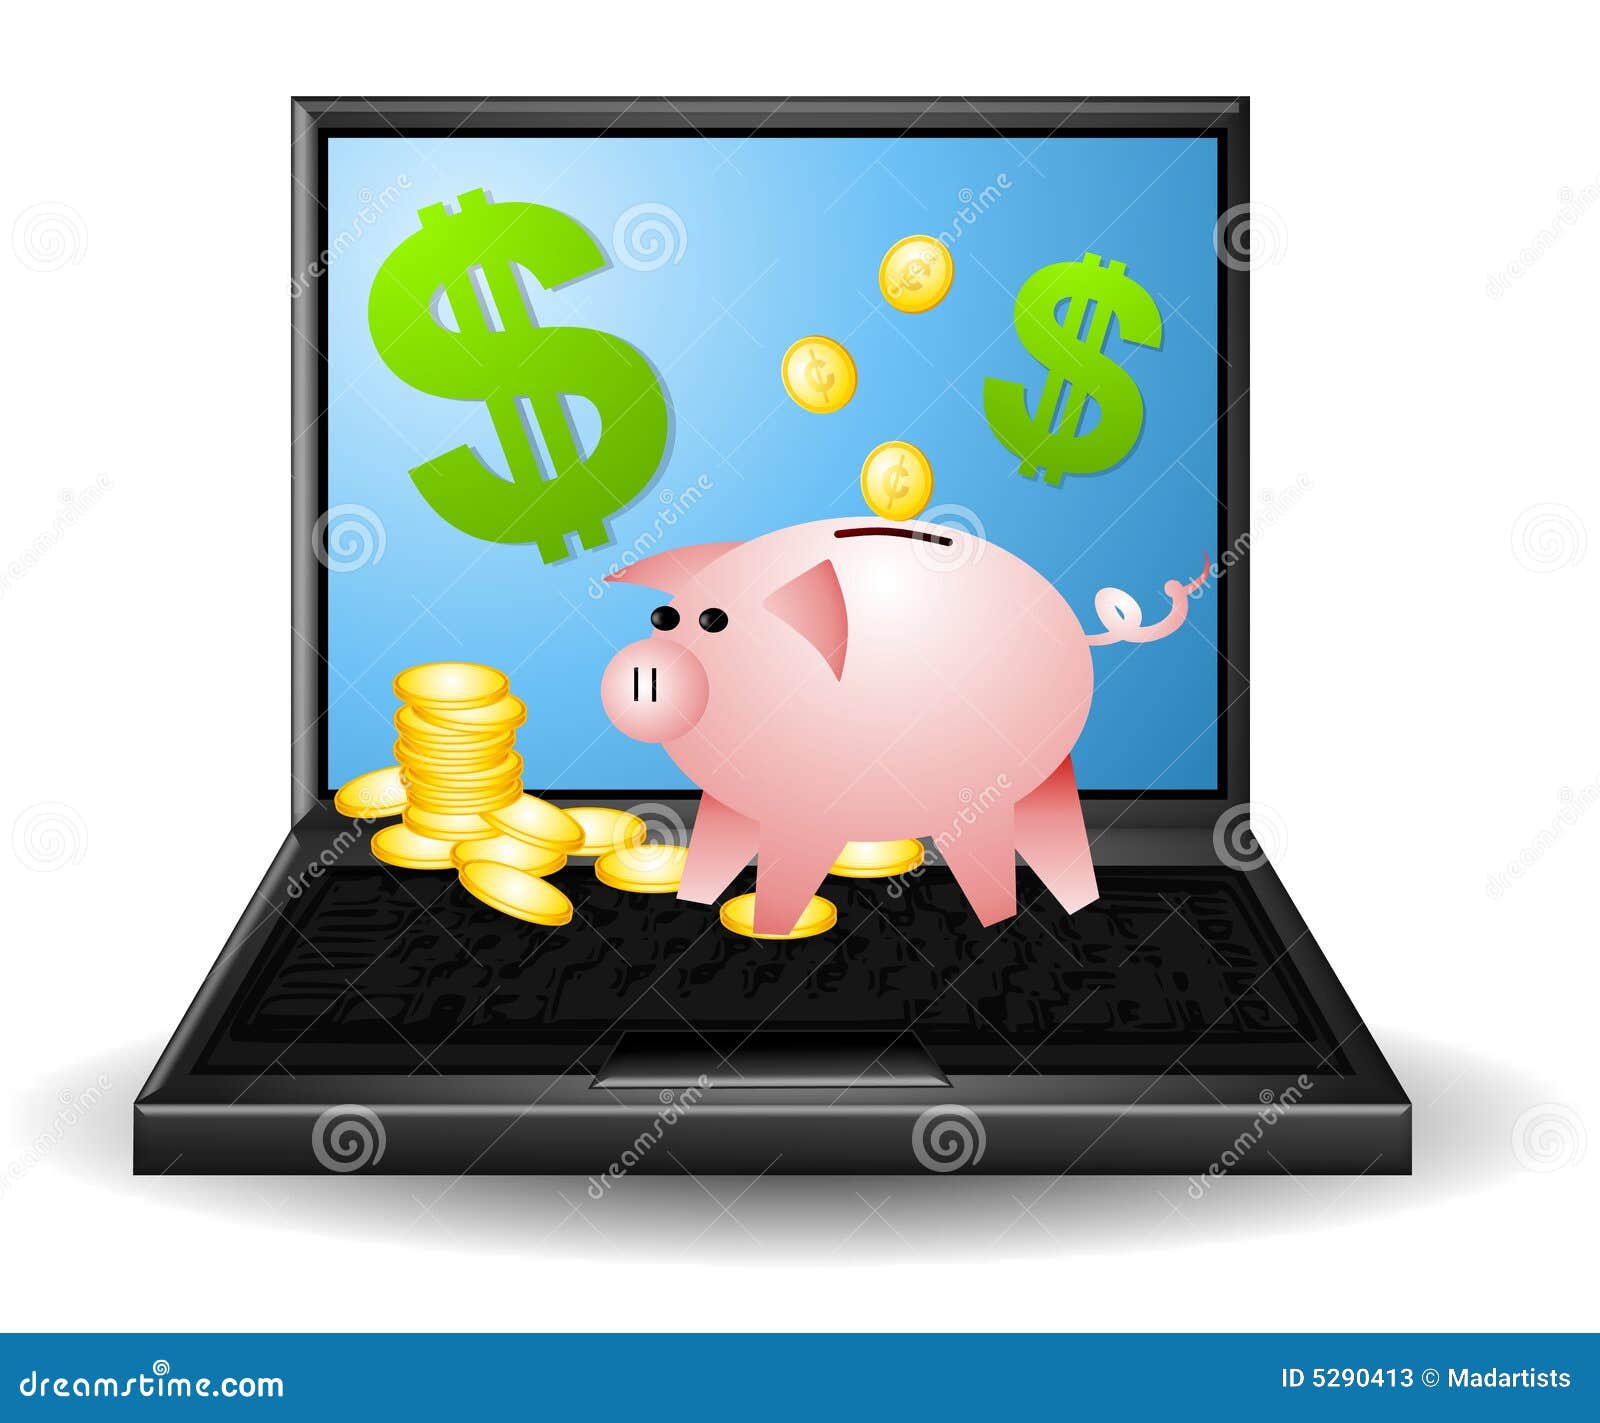 banking-finances-online-5290413.jpg